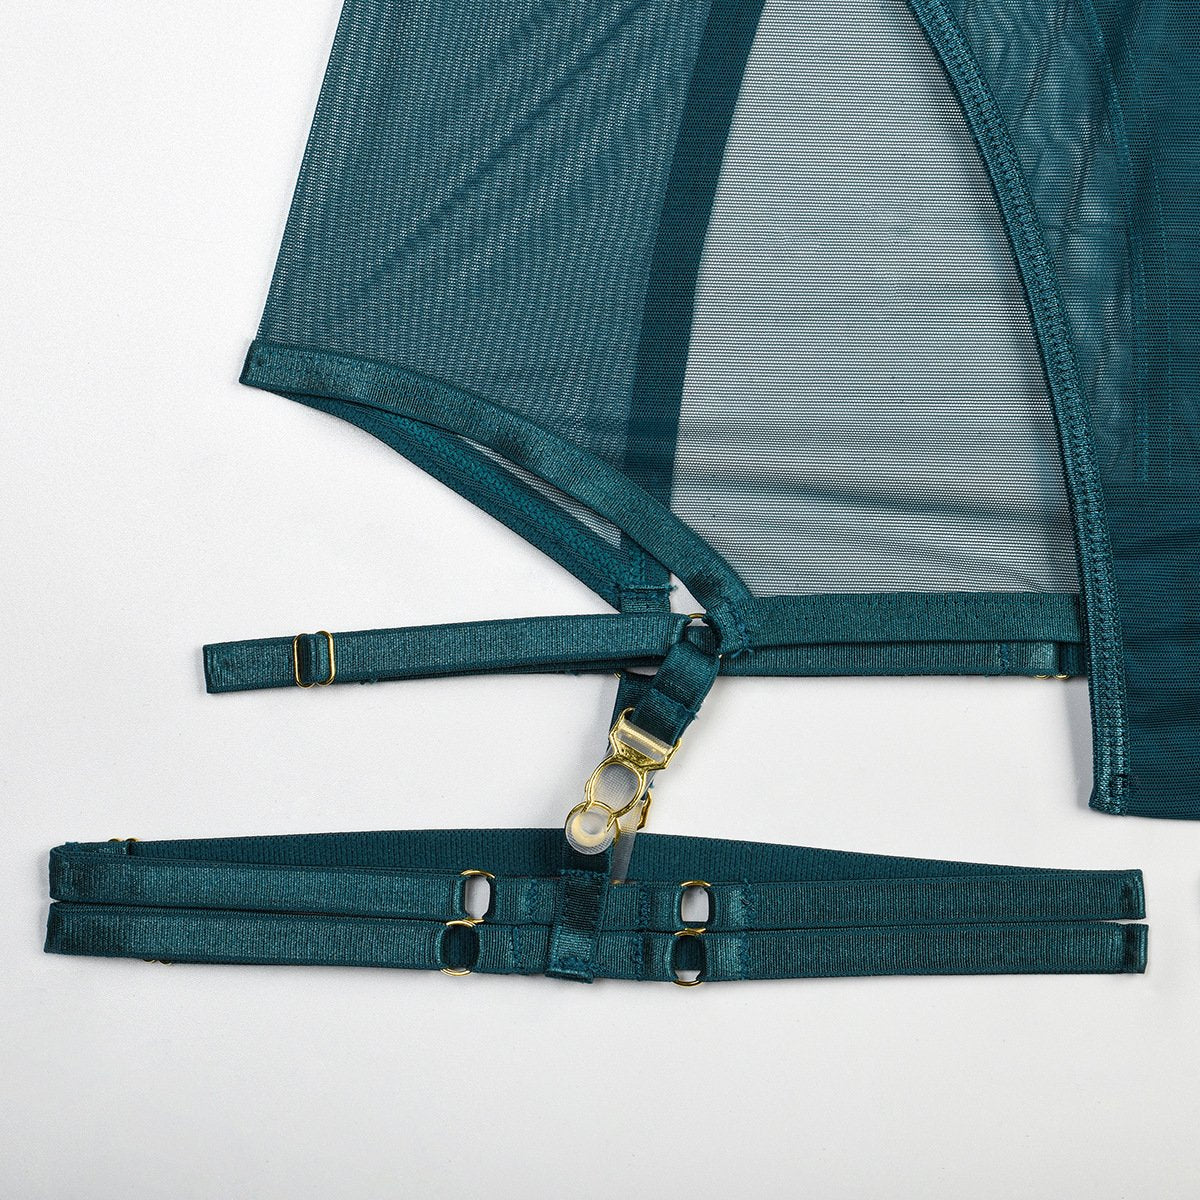 Harness mesh underwire garter lingerie set